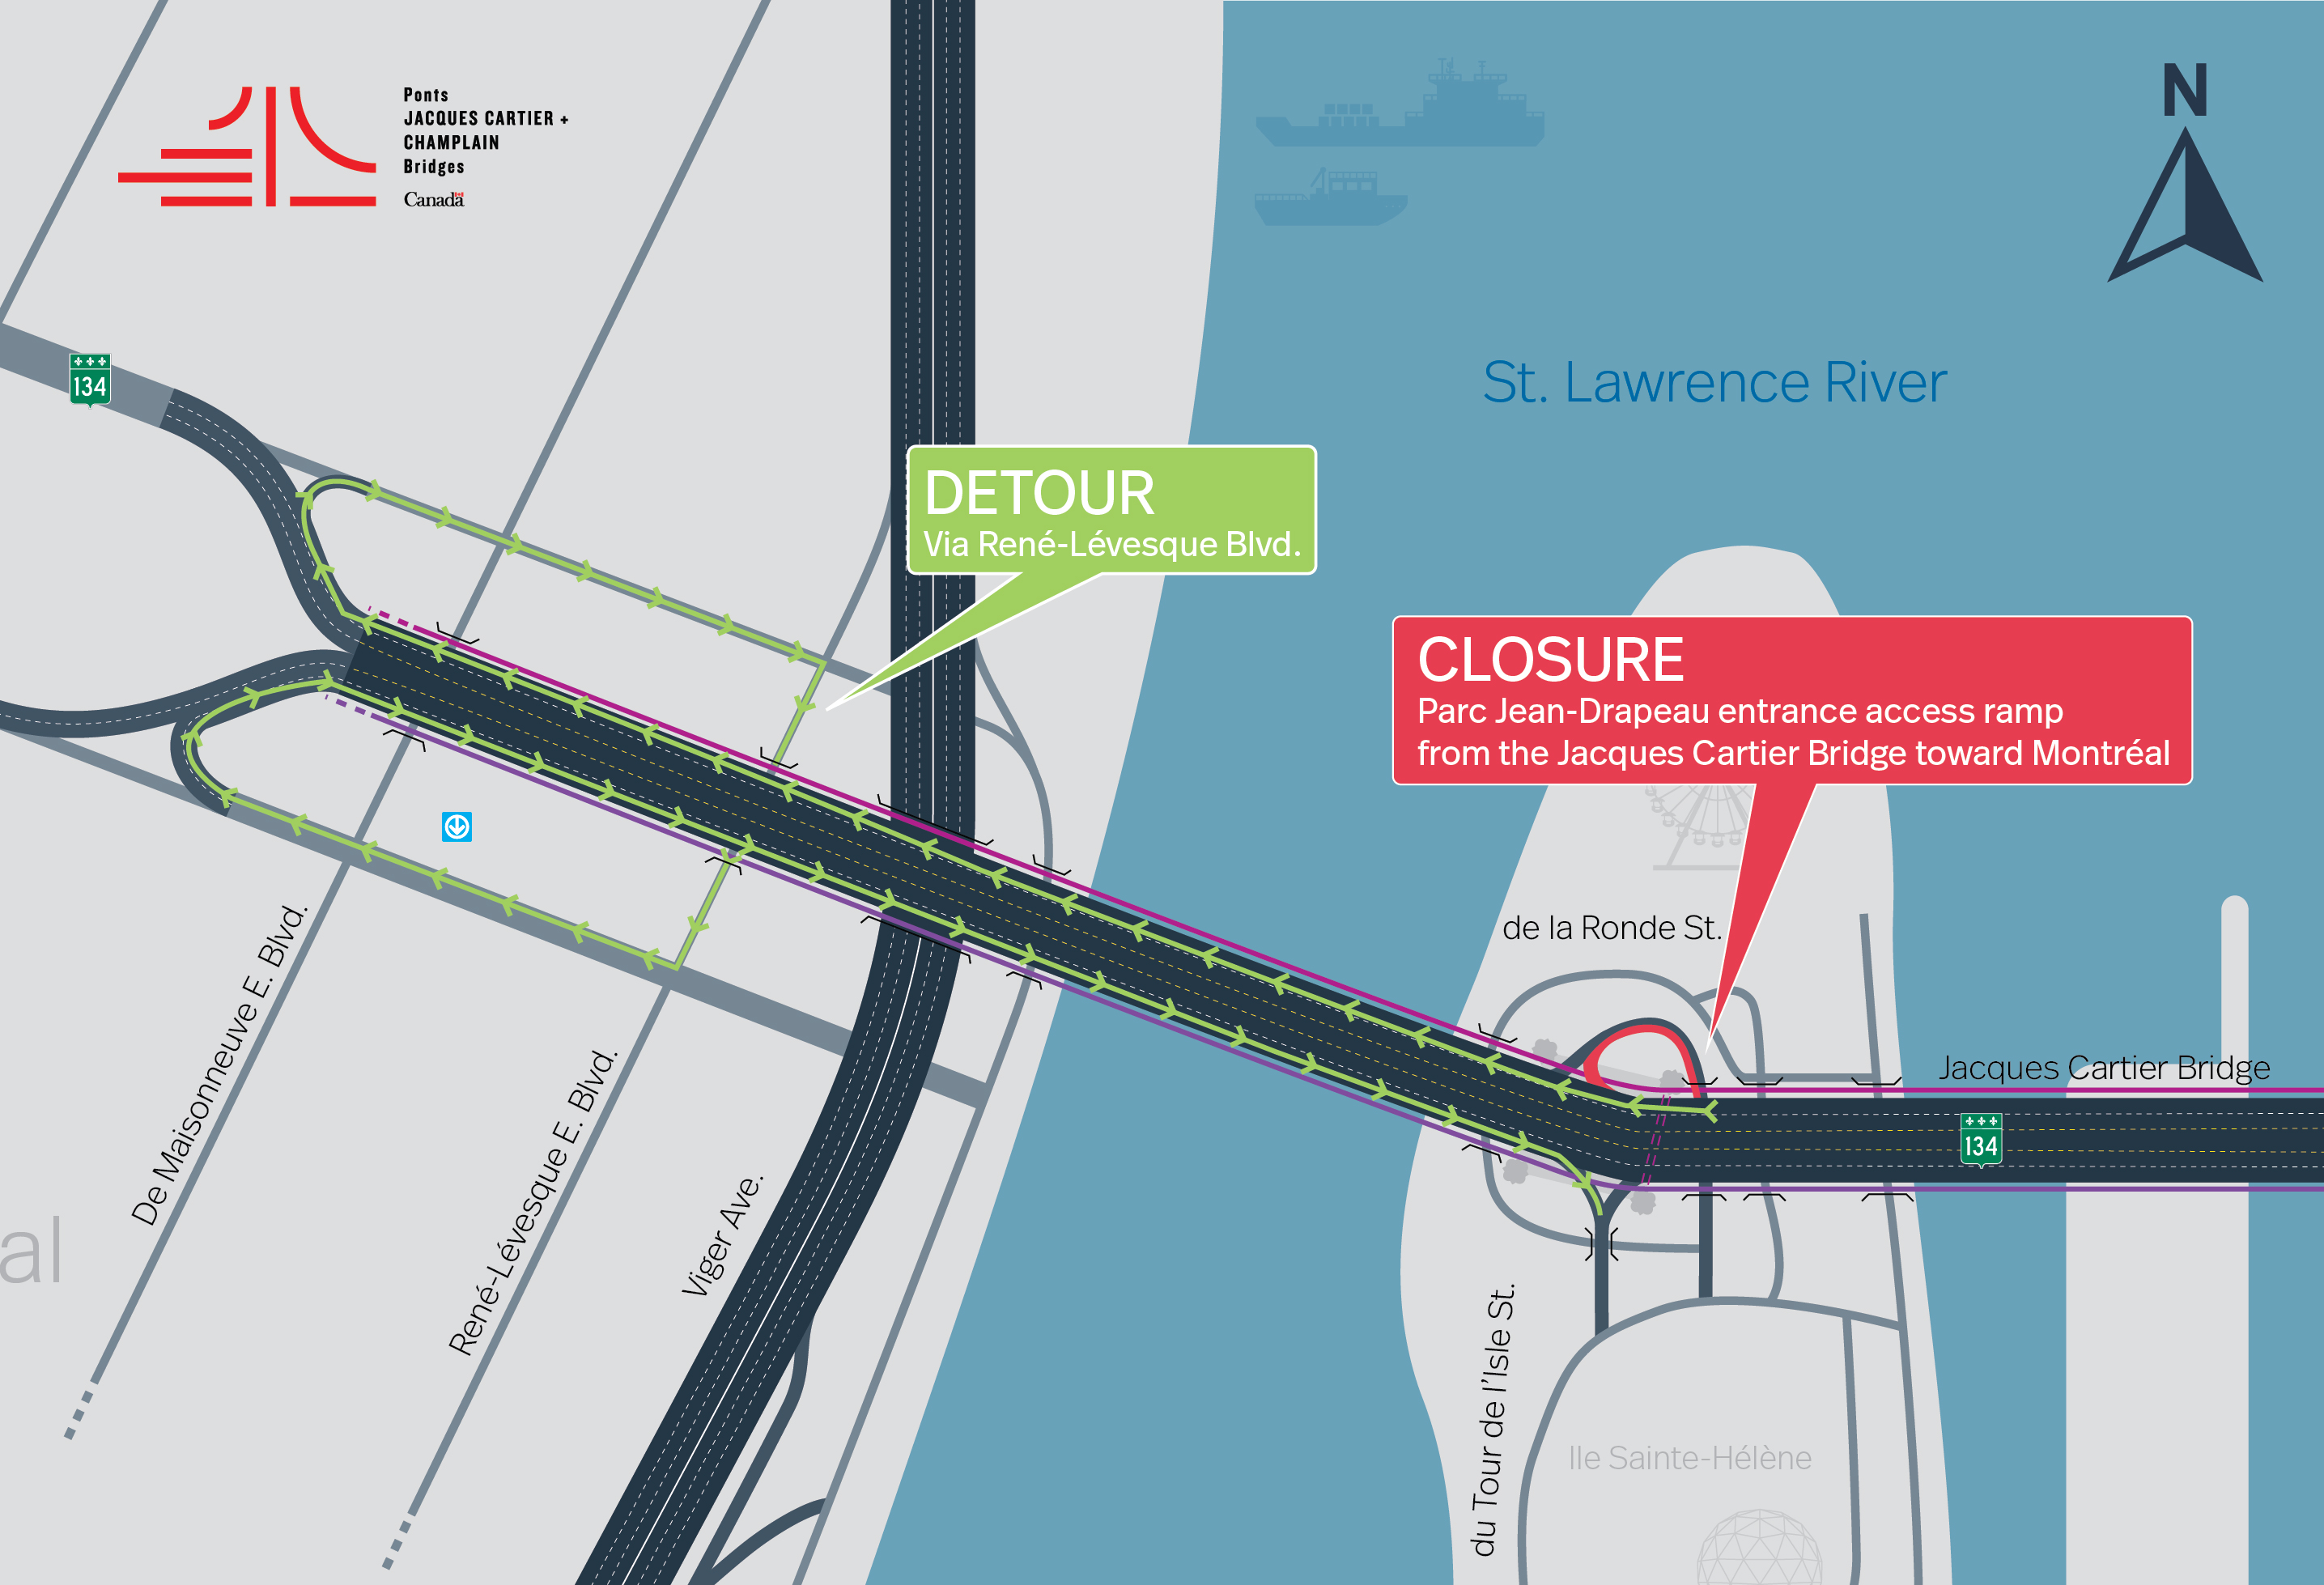 Jacques Cartier Bridge | Complete closure of the Parc Jean Drapeau access ramp toward Montréal, on May 2 and 3